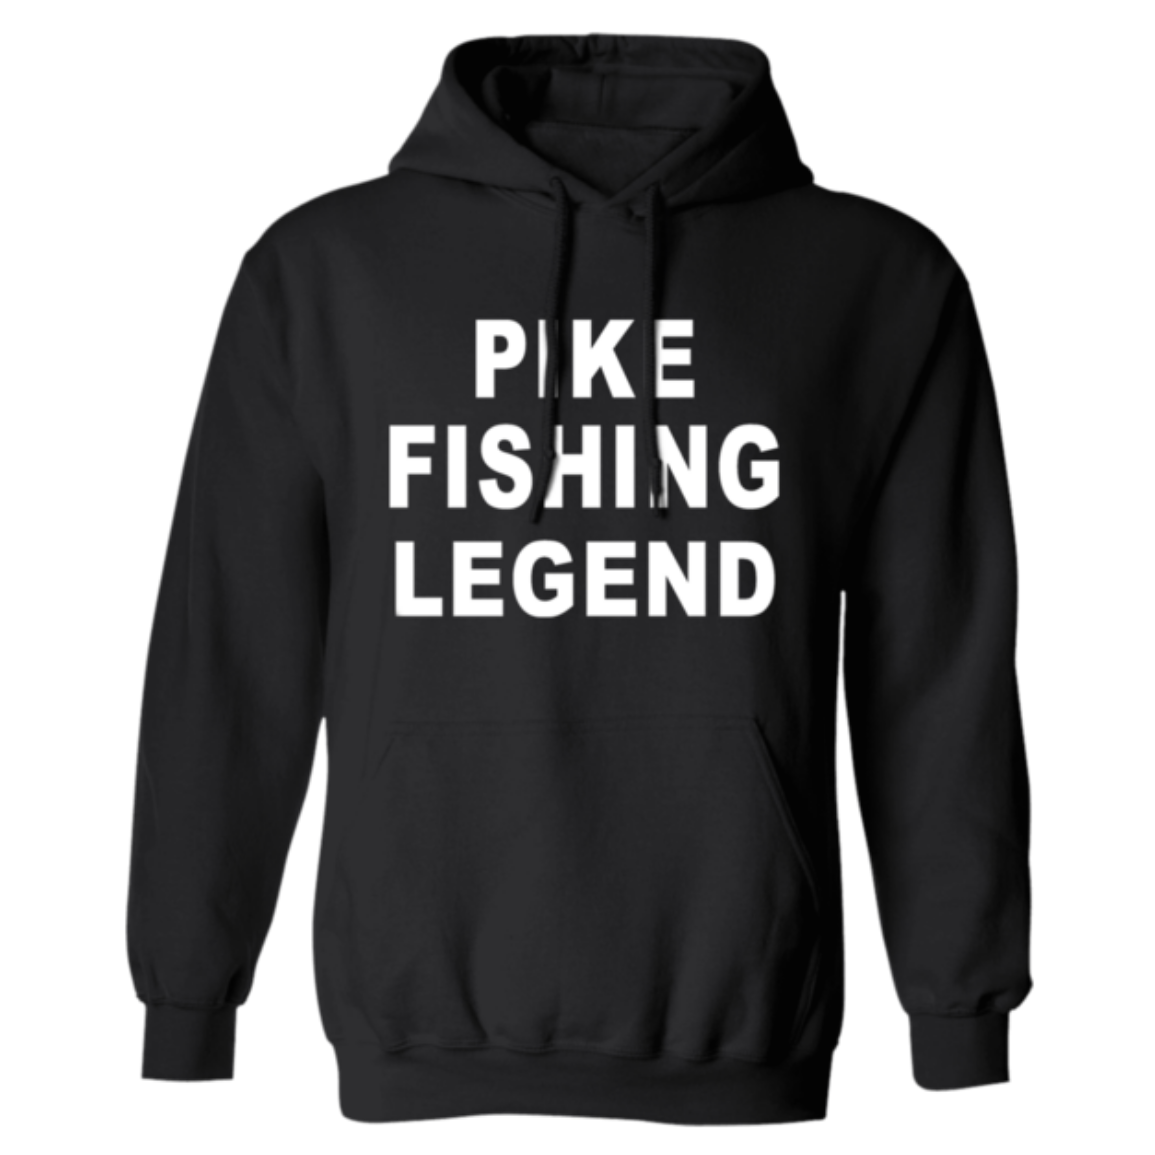 Pike fishing legend hoodie w black